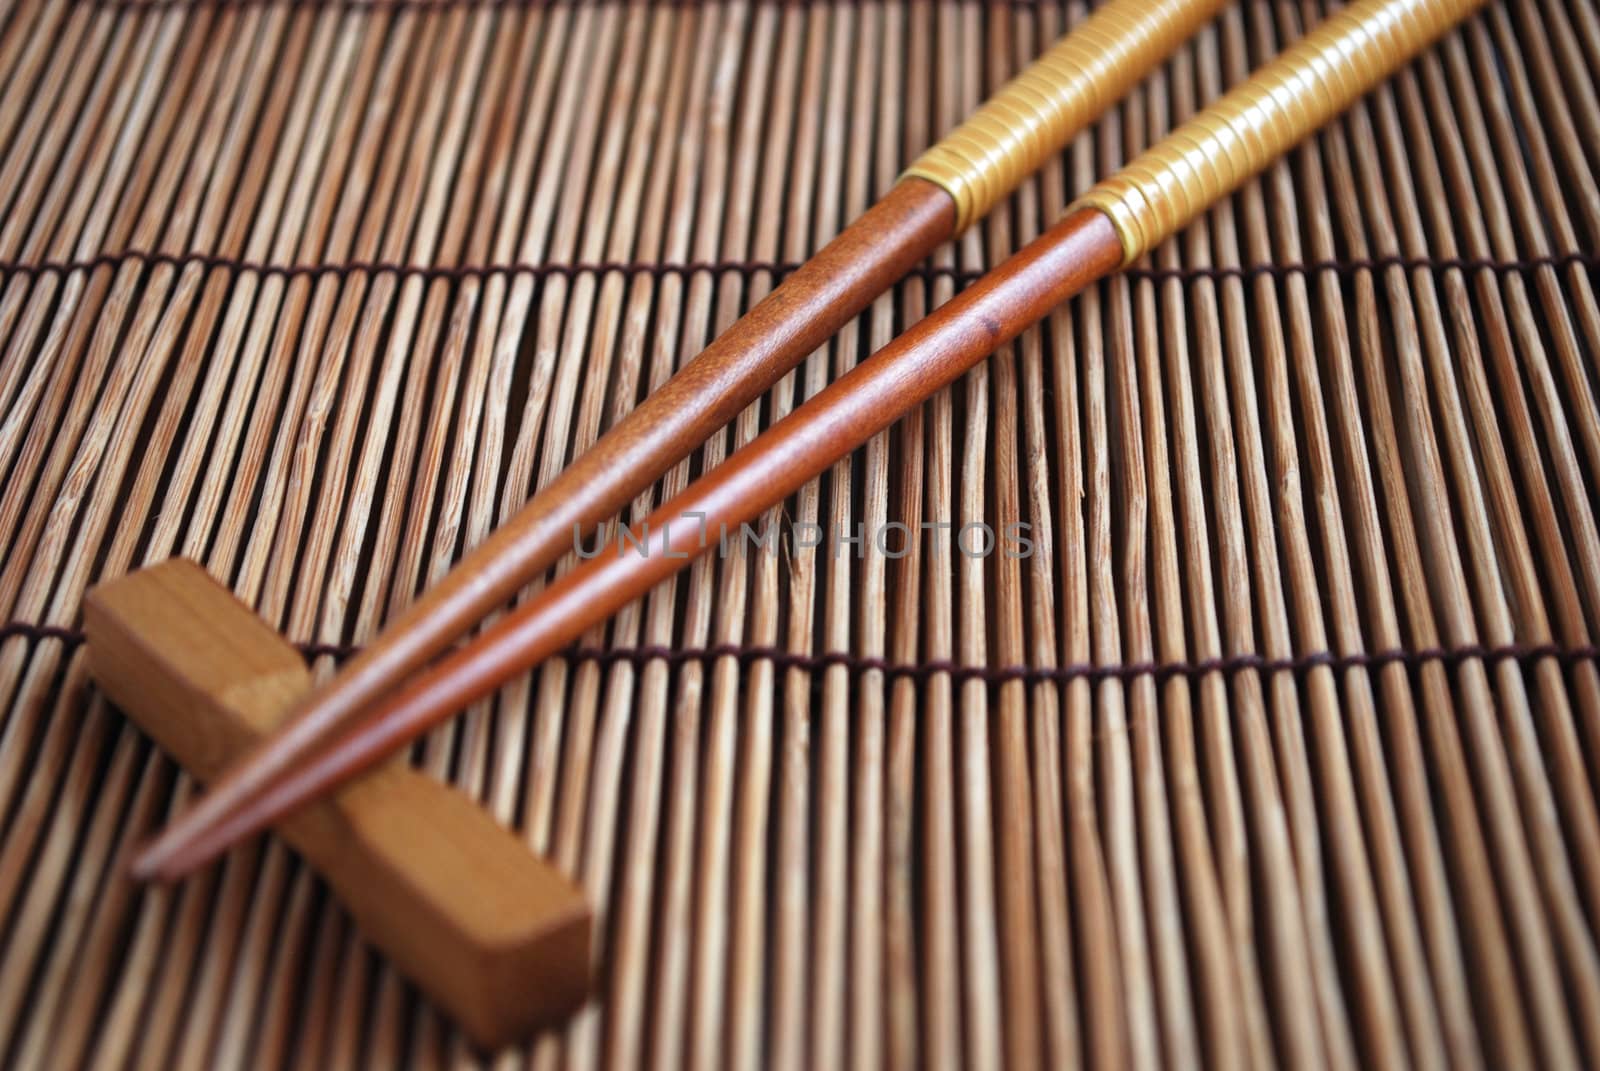 Chopsticks on brown bamboo matting background   by svtrotof